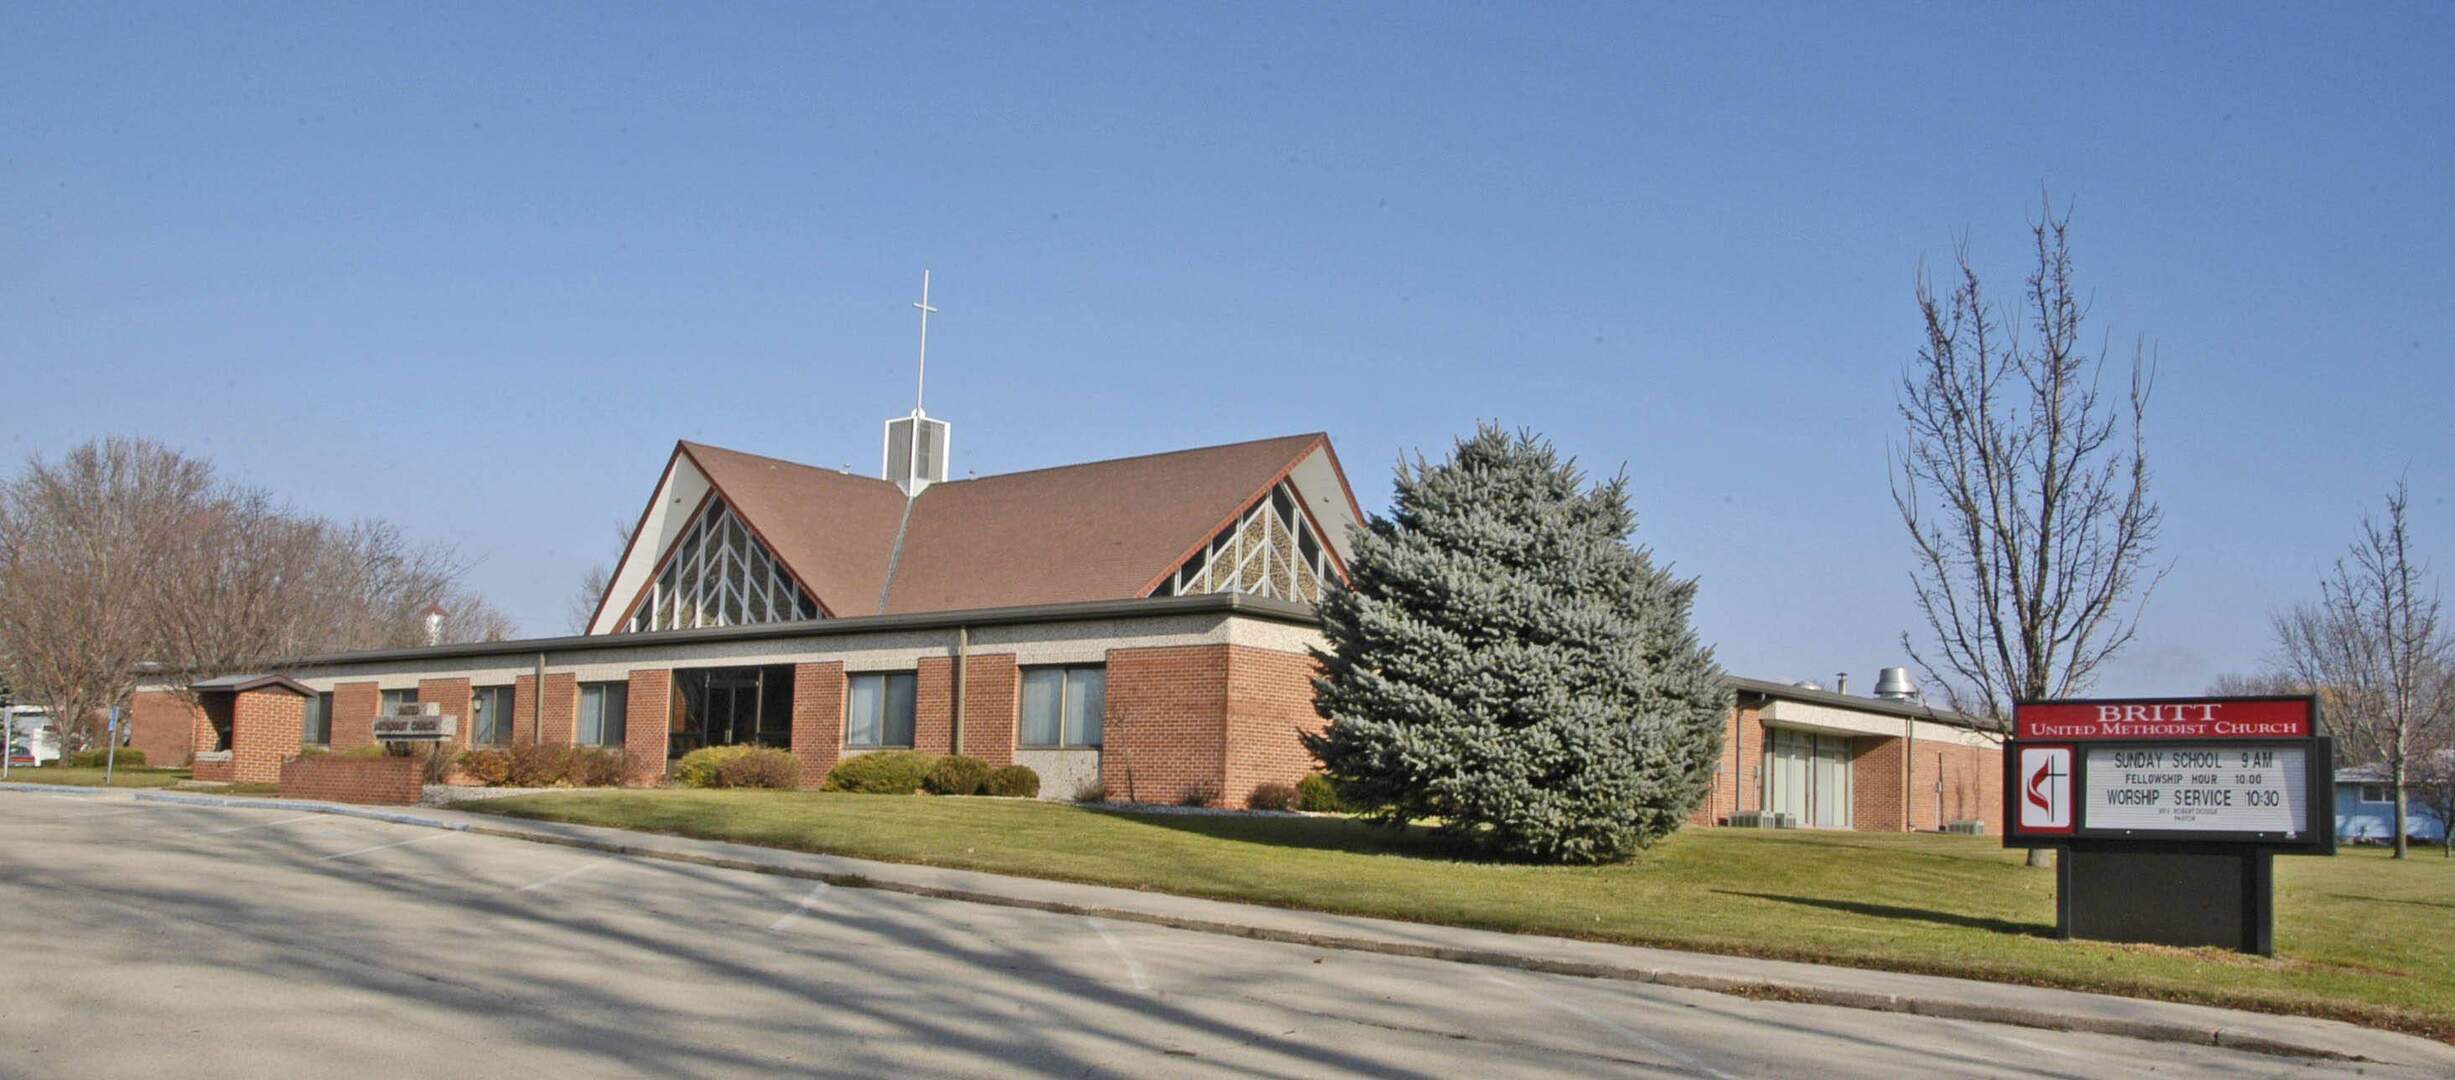 United Methodist Church - Britt